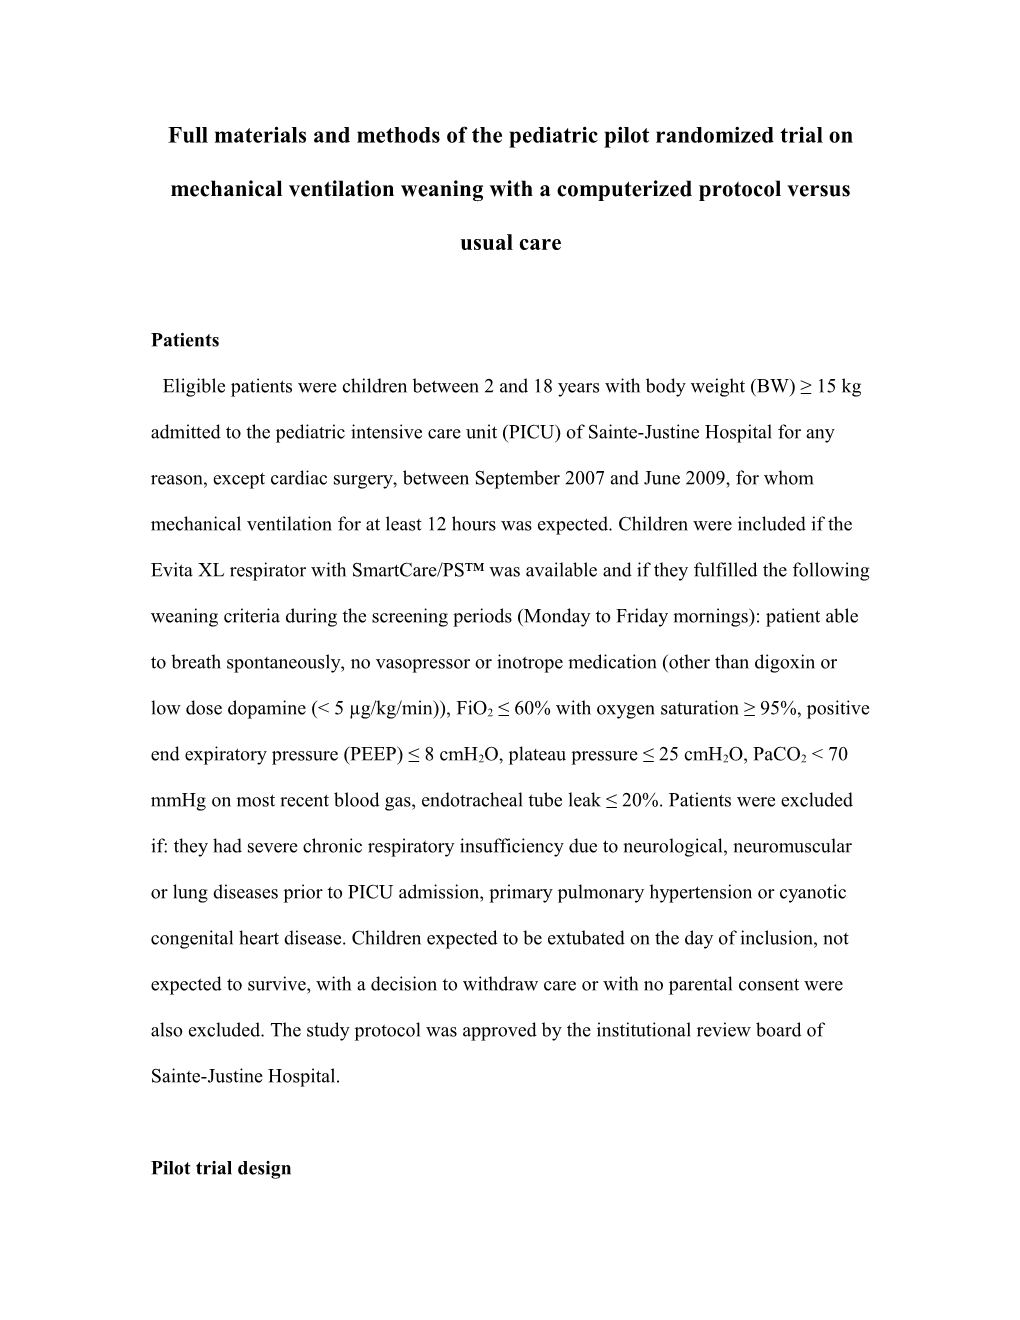 Full Methodology of the Pediatric Pilot Randomized Trial on Mechanical Ventilation Weaning